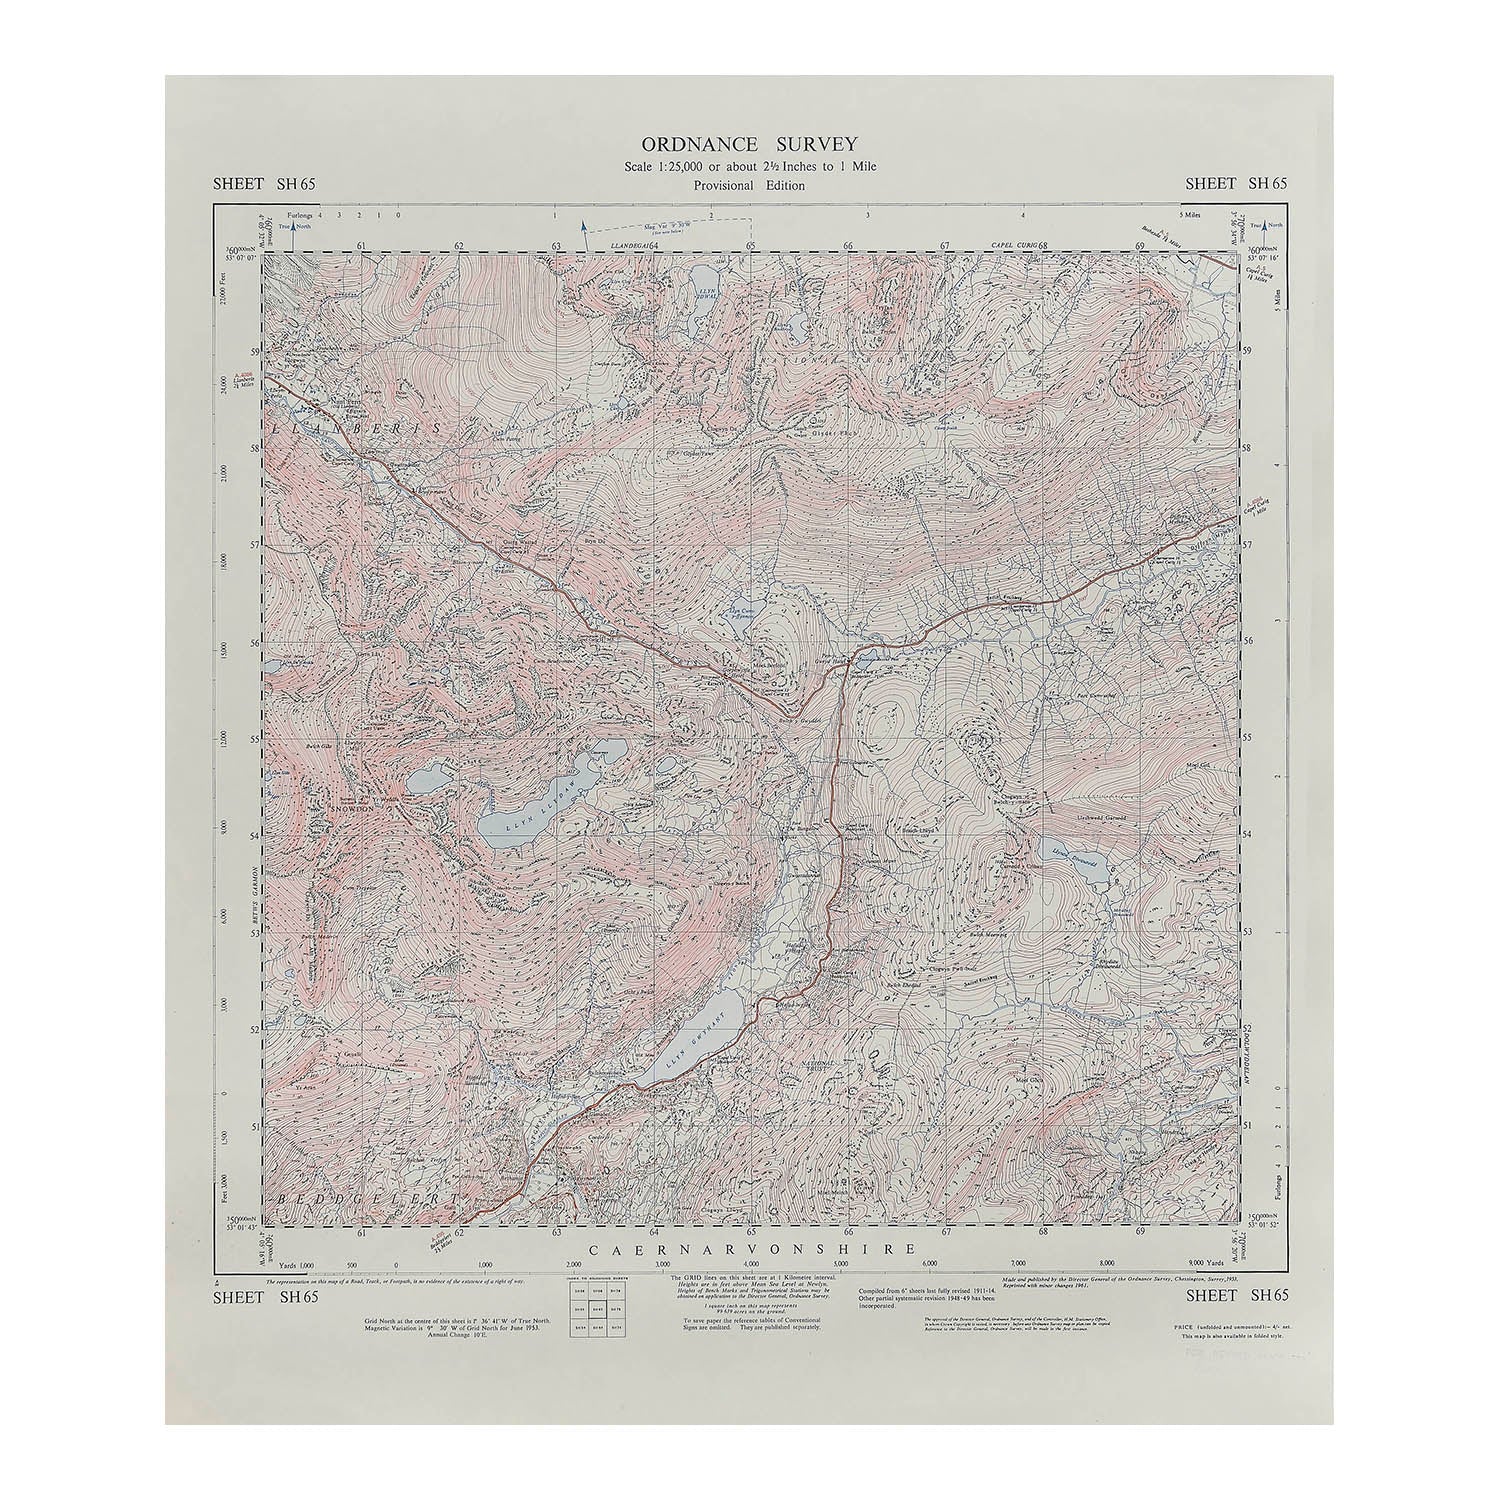 Ordnance Survey map of Caernarvonshire (Sheet SH 65), 1:25,000 scale. First published 1953, revised edition 1961. Map shows the summit of Snowdon (with mountain railway marked), Llanberis, Llyn Gwynant and Llyn Llydaw